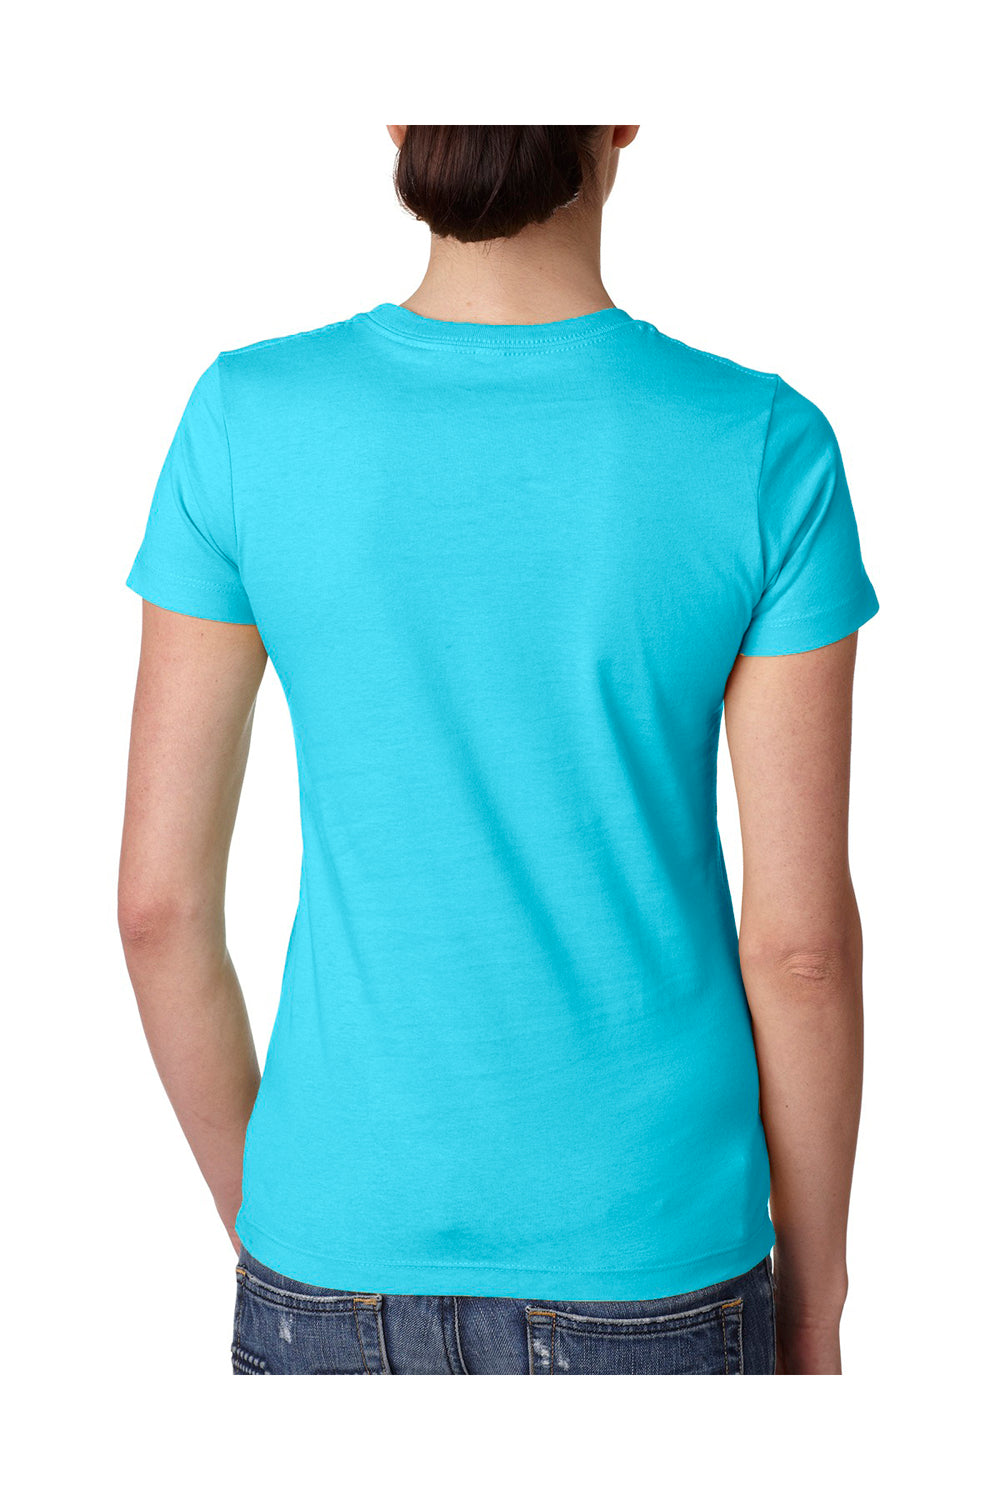 Next Level N3900 Womens Boyfriend Fine Jersey Short Sleeve Crewneck T-Shirt Tahiti Blue Back